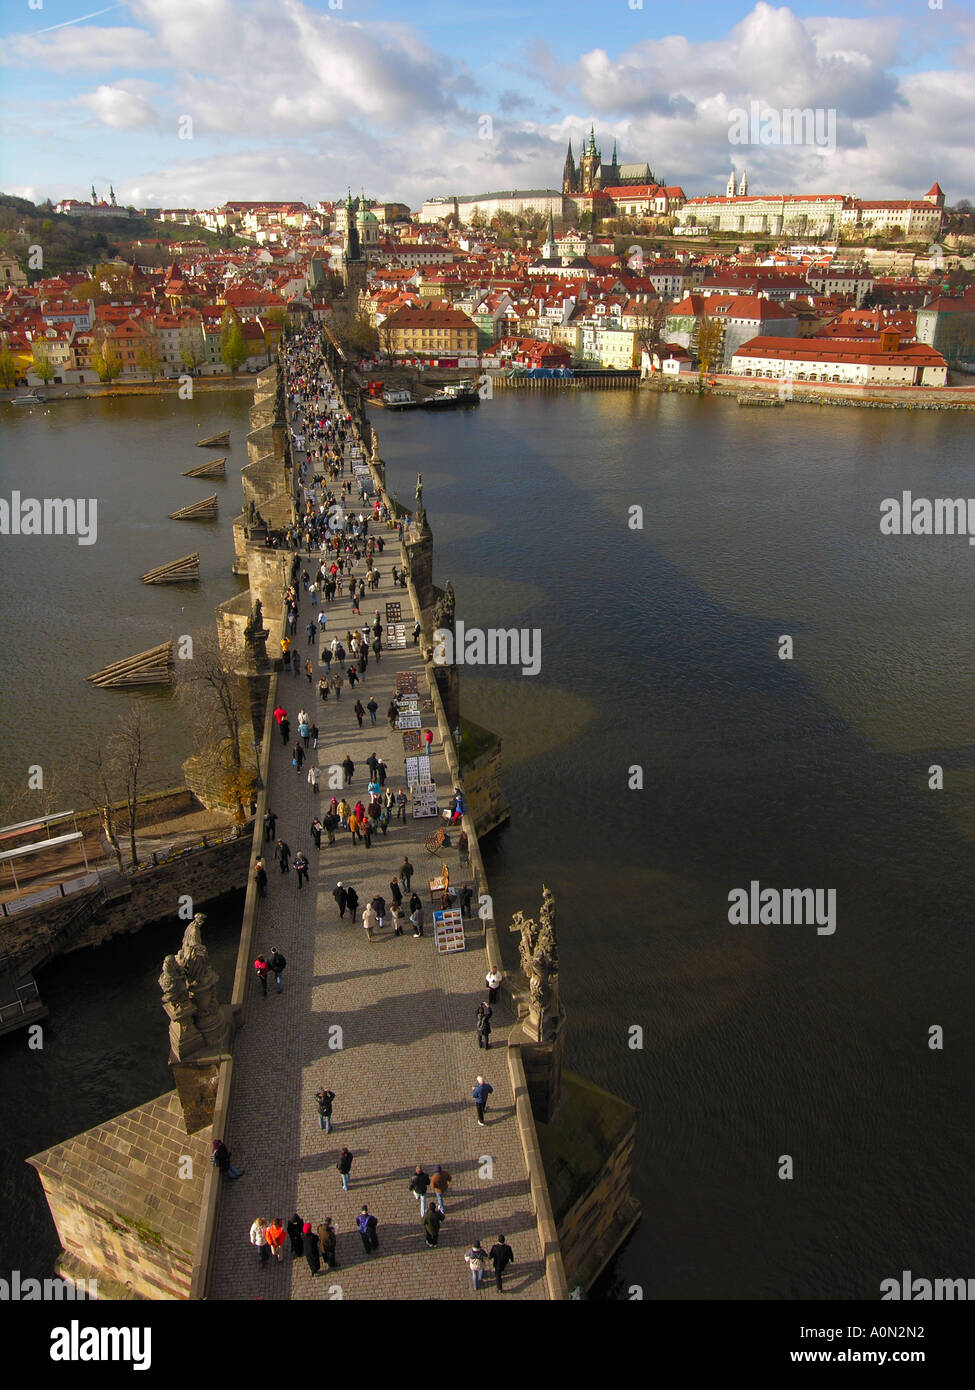 An aerial view of the Charles Bridge, Prague, Czech Republic. Stock Photo